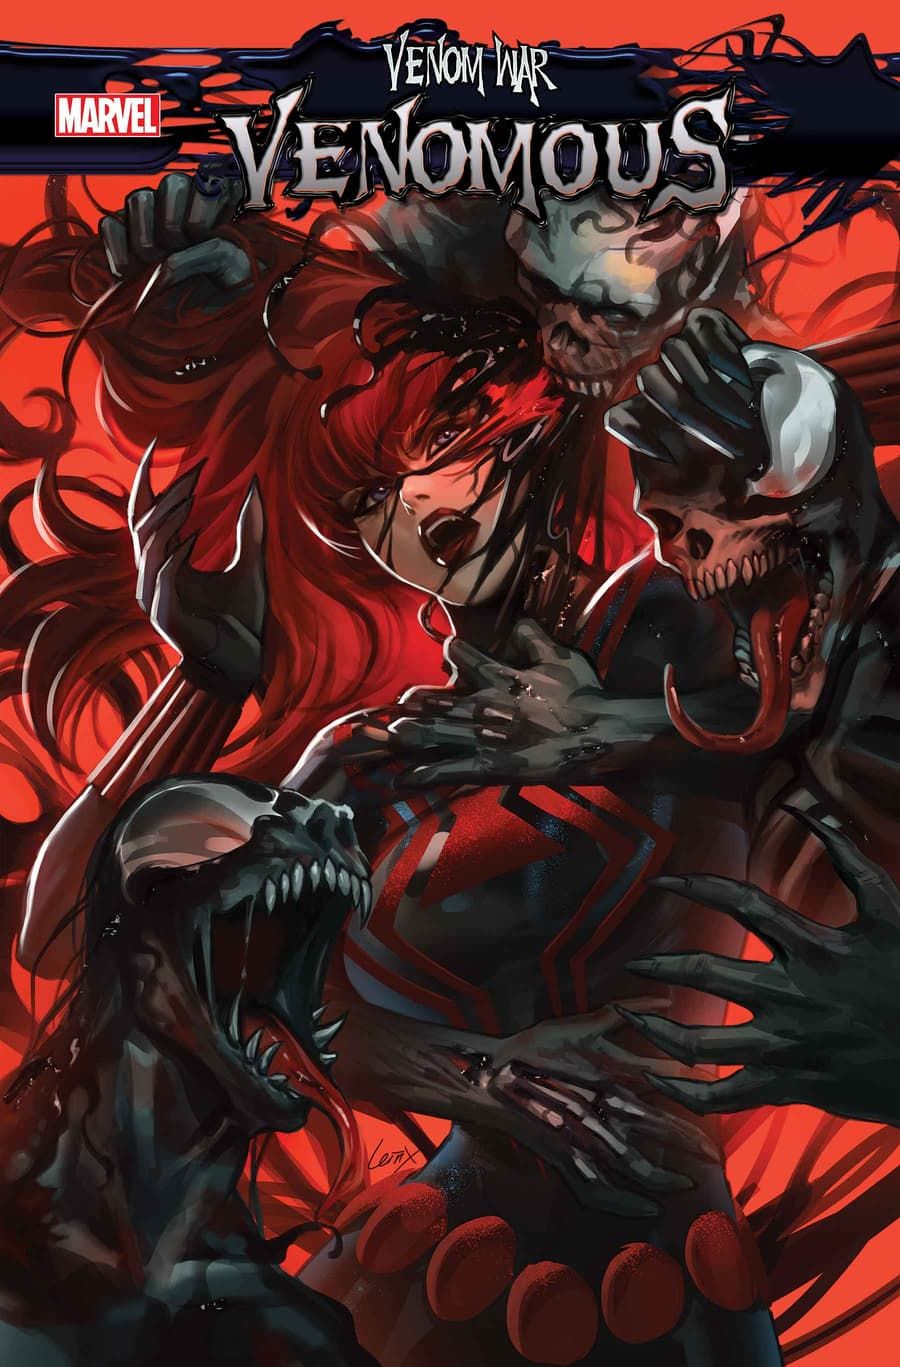 07 Venom War Venomous 2 Okładka